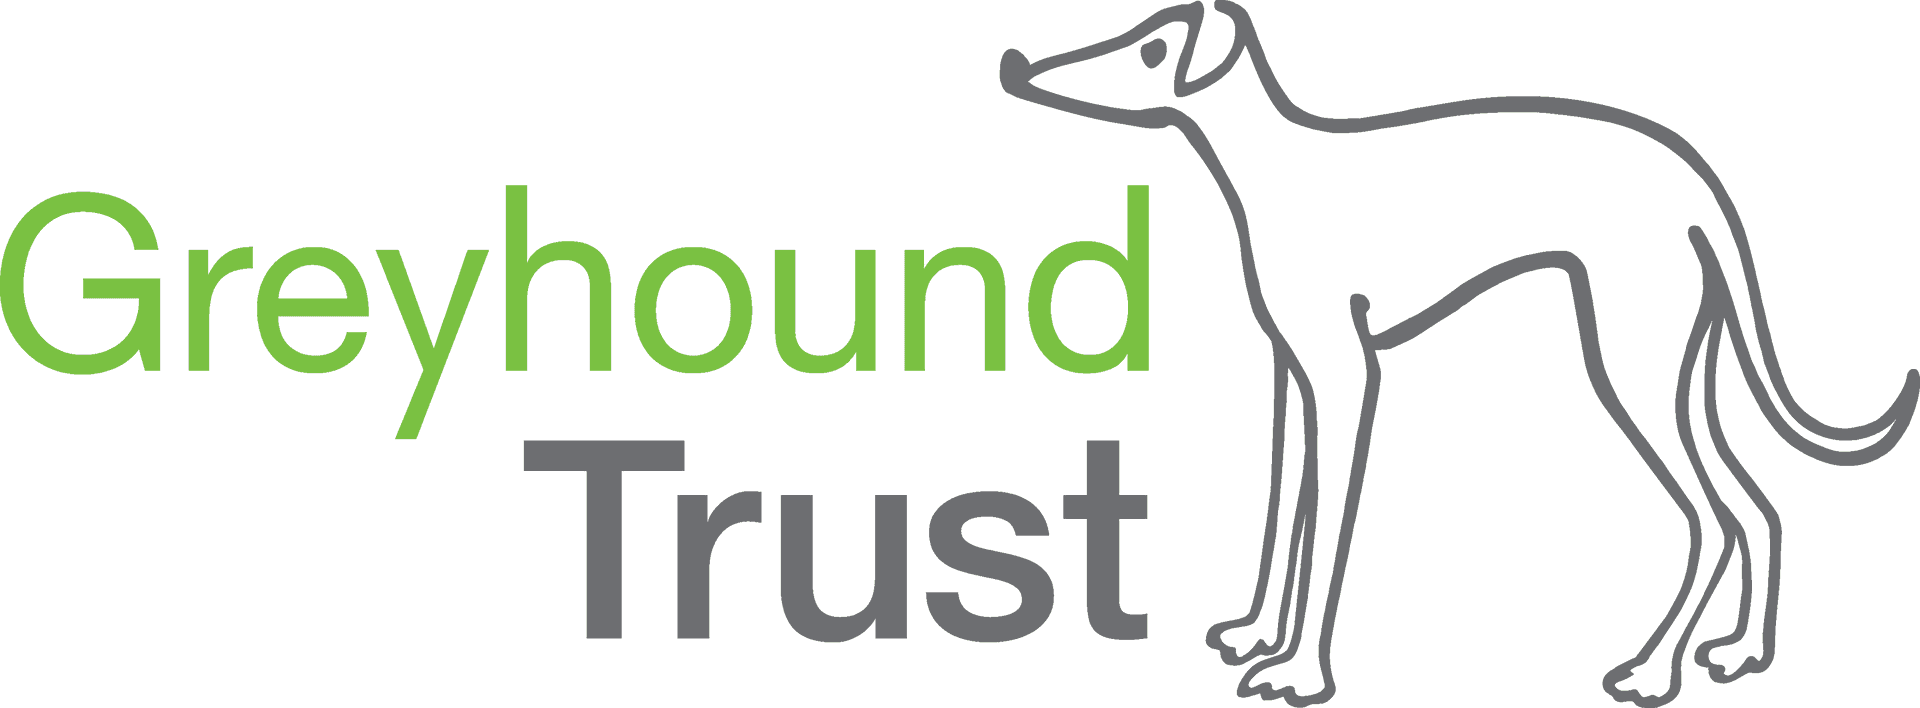 Greyhound Trust Logo PNG